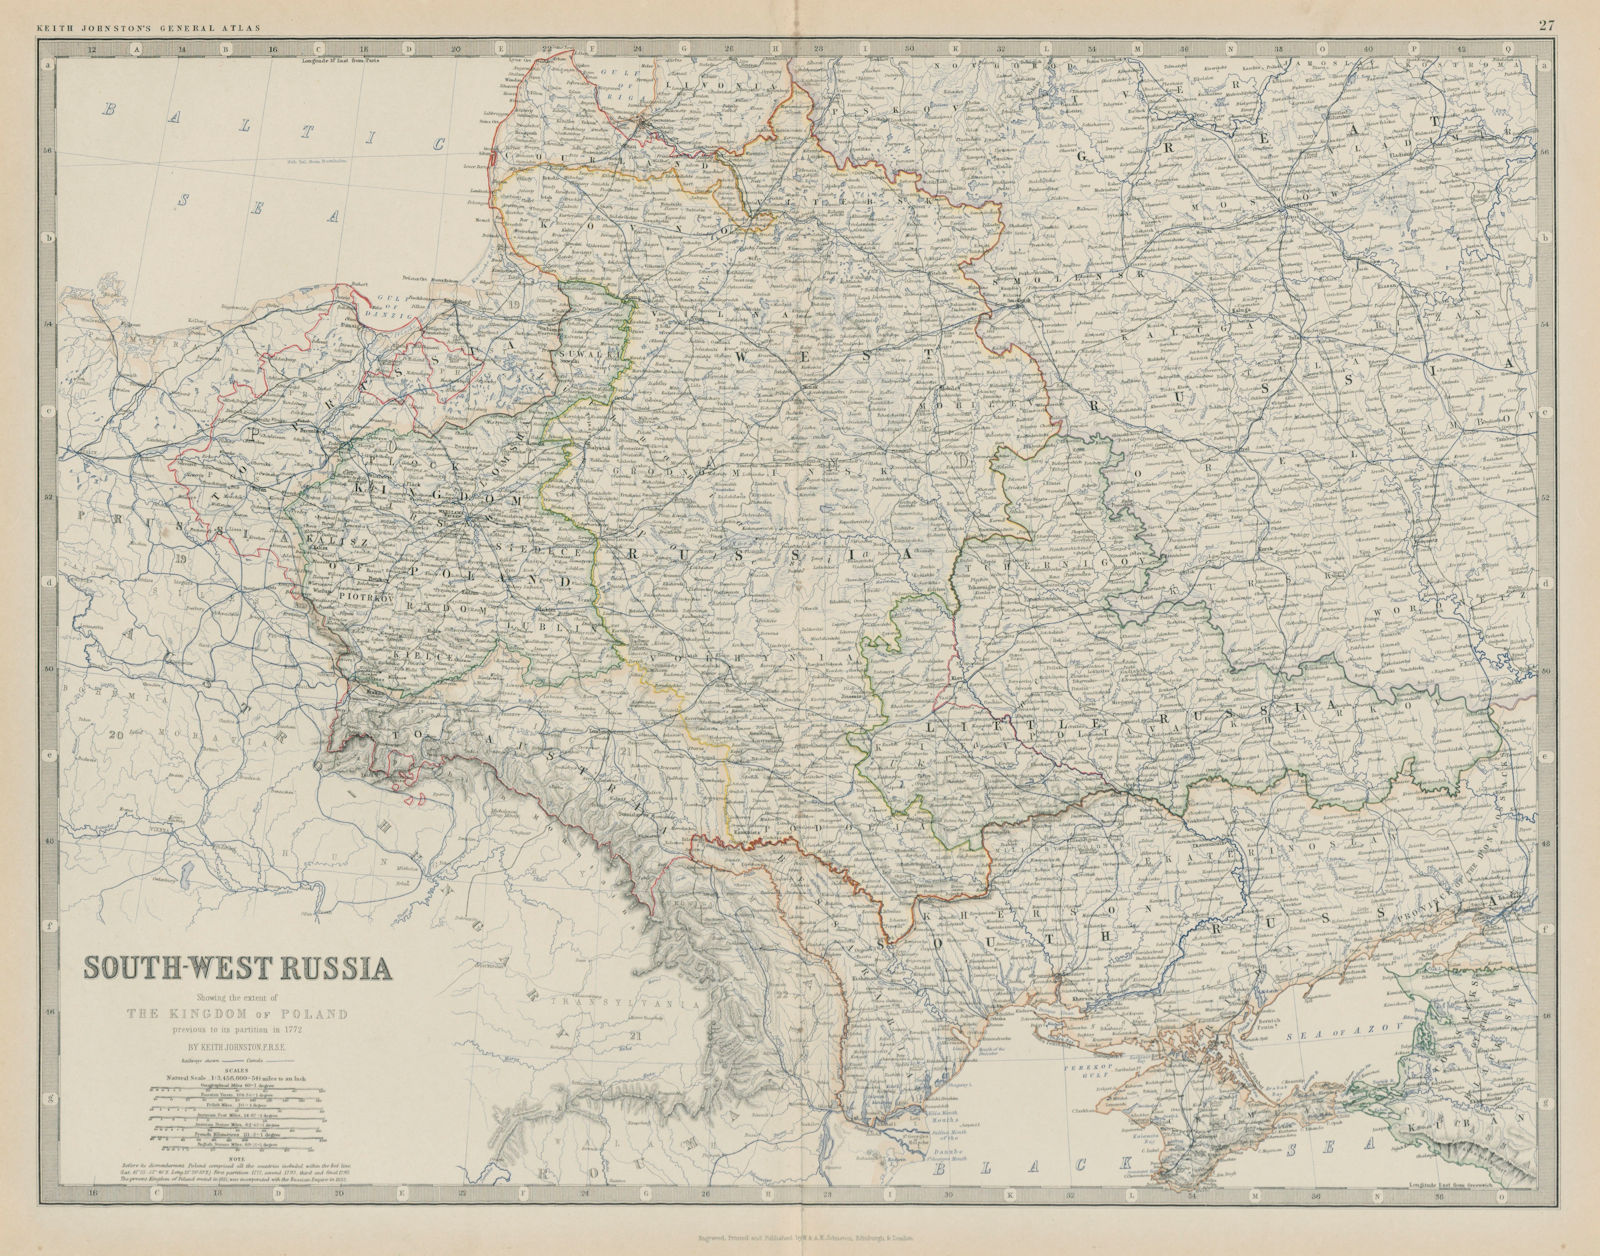 South-west Russia. Ukraine Belarus Poland 1772. 50x60cm. JOHNSTON 1879 old map